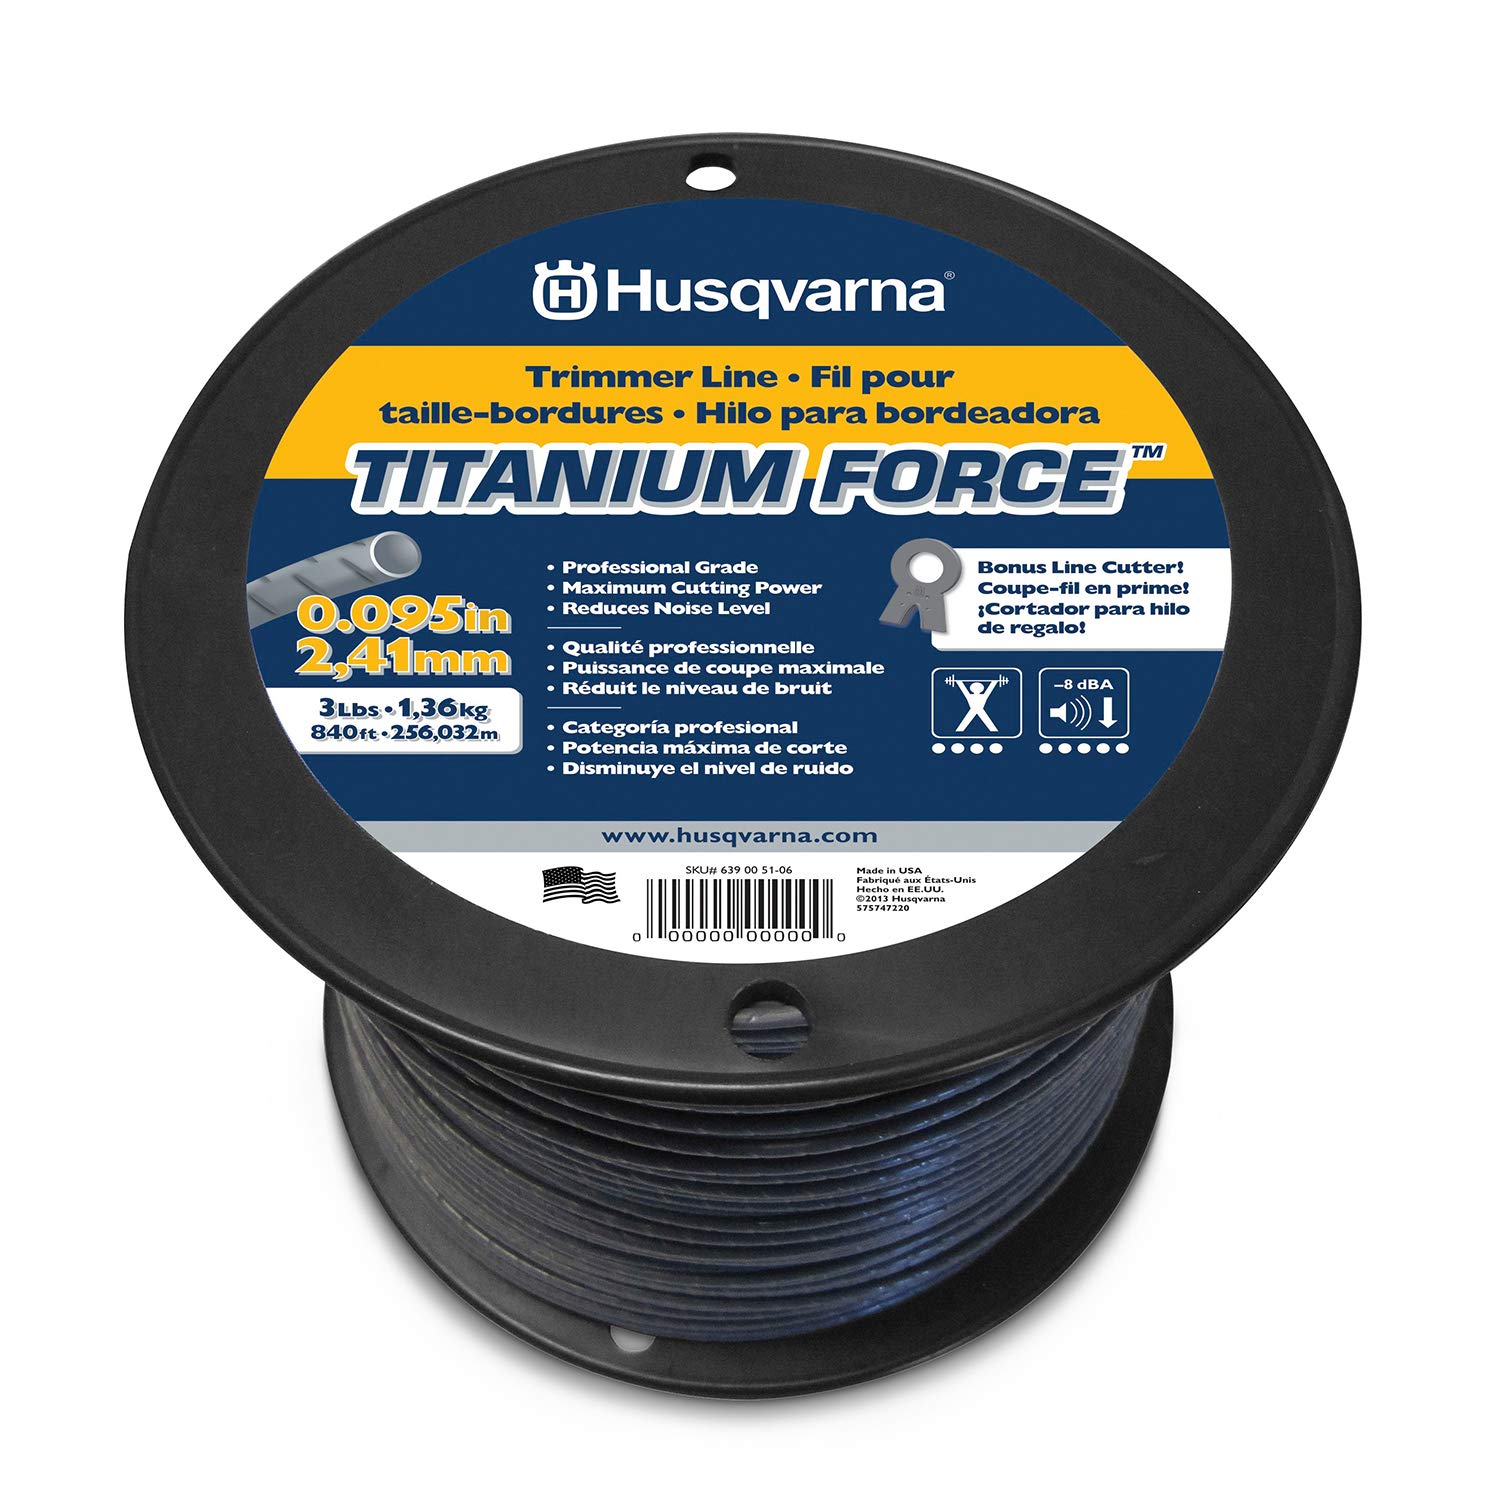 Husqvarna Titanium Force String Trimmer Line